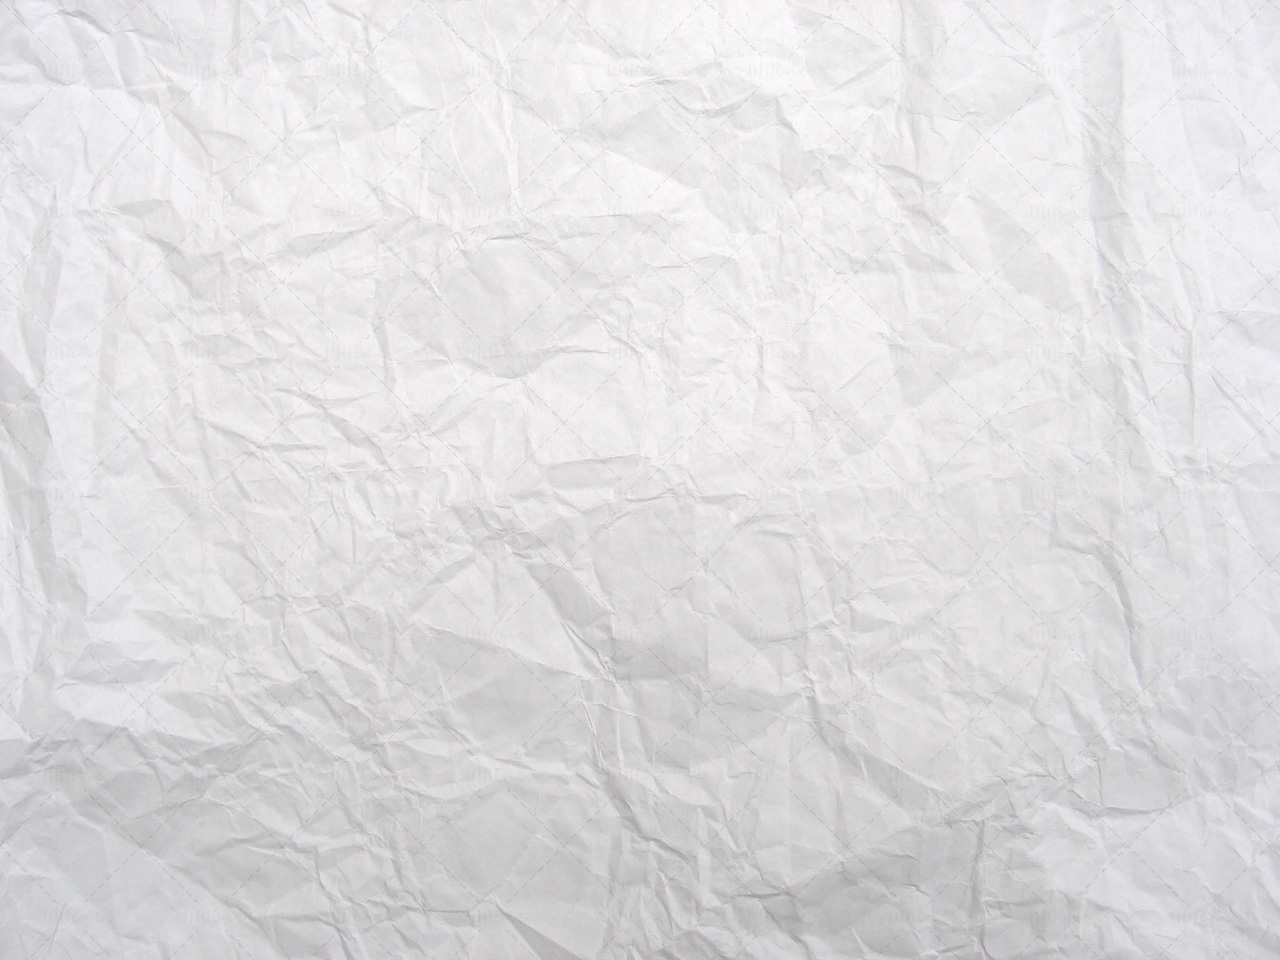 Crumpled white paper texture jpg